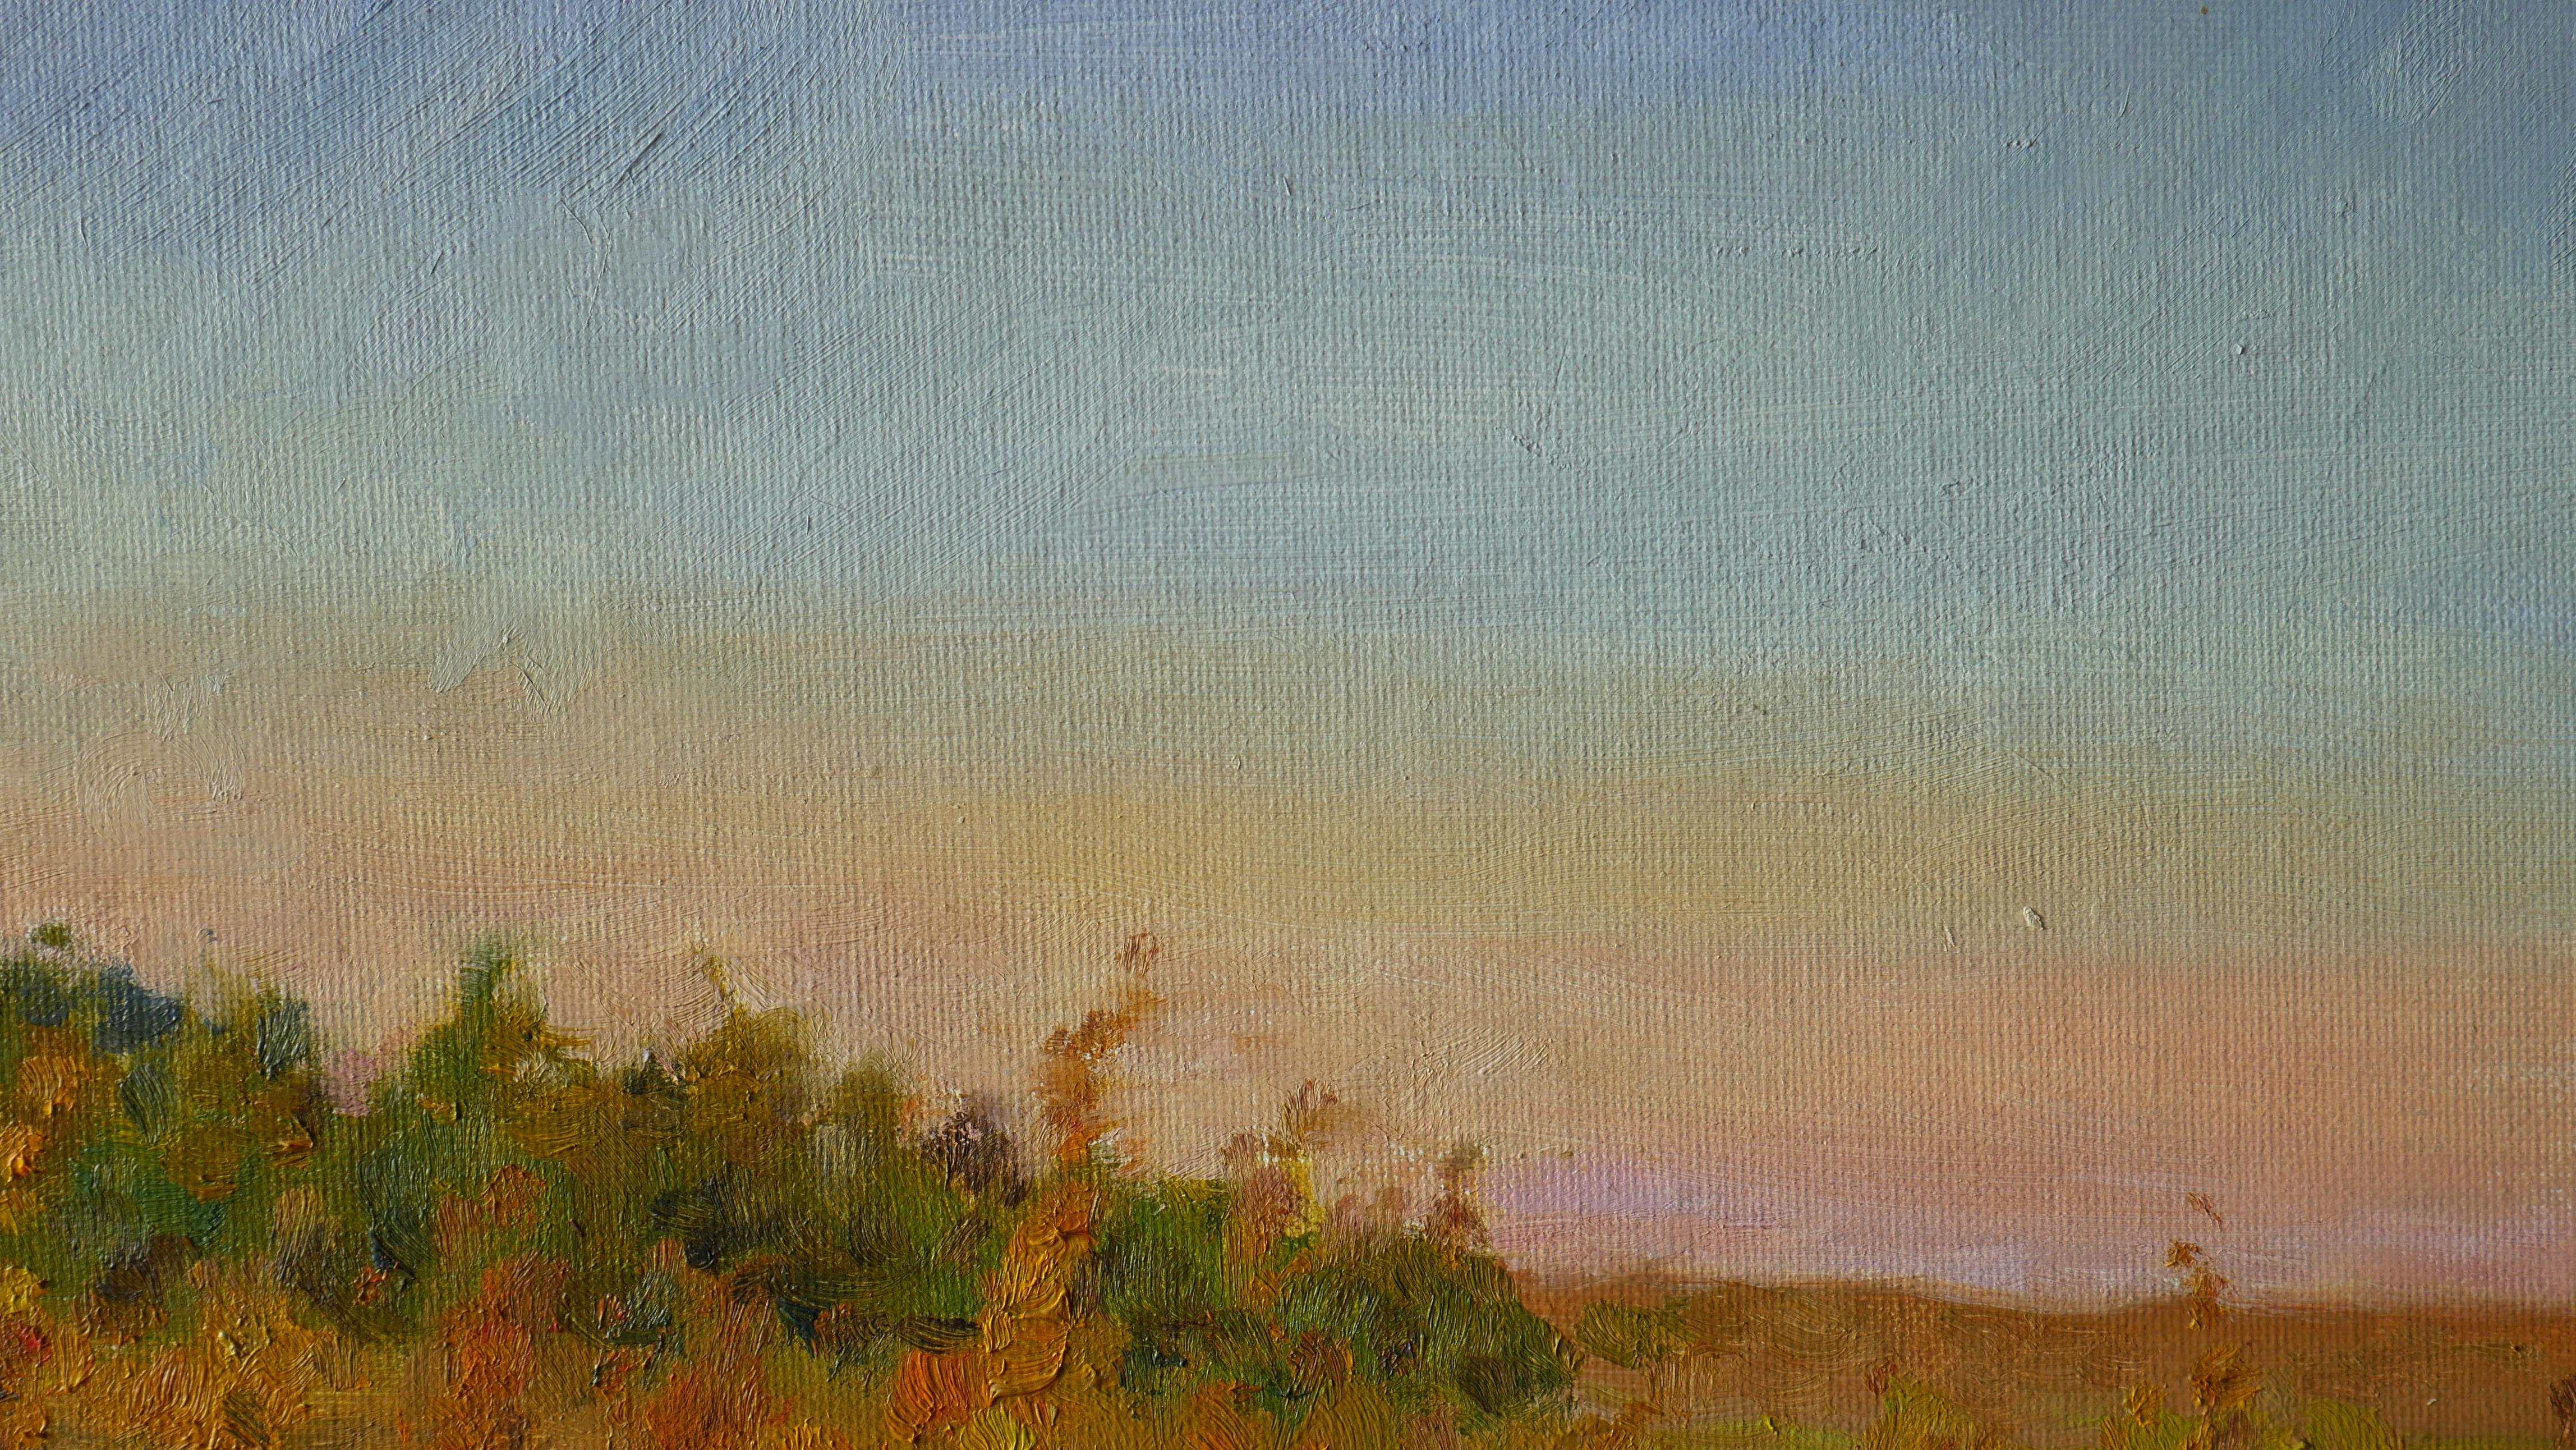 The Autumn Sunset - sunset landscape painting For Sale 1